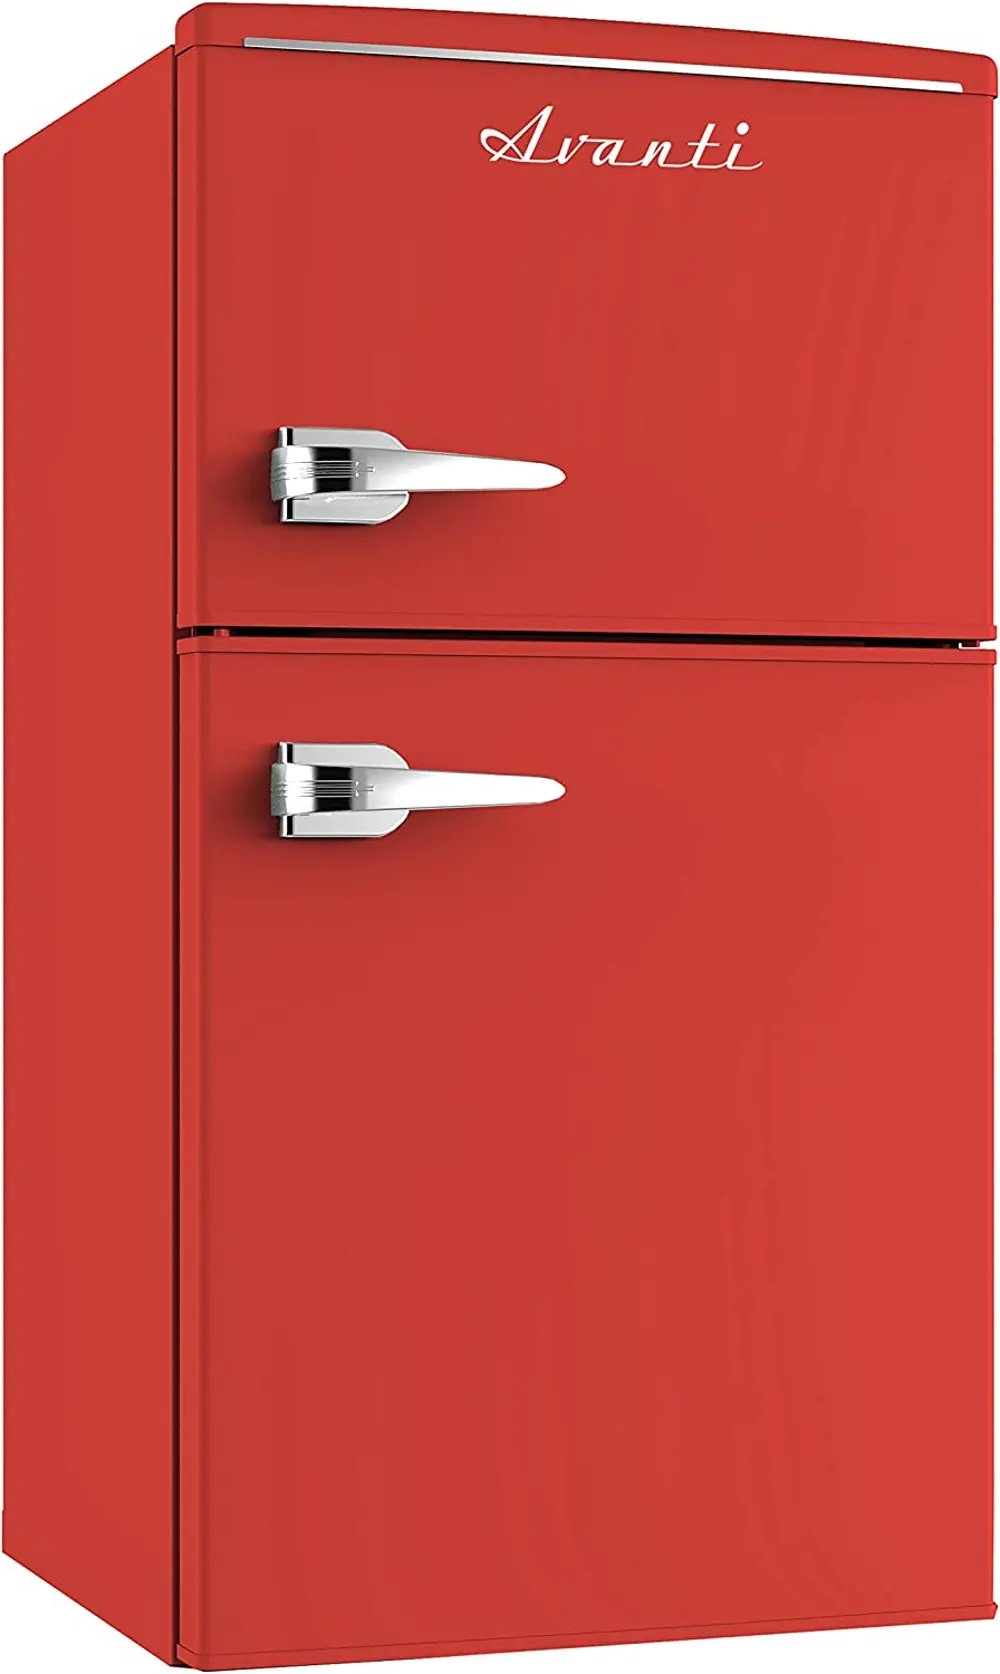 RMRT30X5R-IS Avanti 3.0 cu ft Retro Refrigerator with Freezer - Red-1